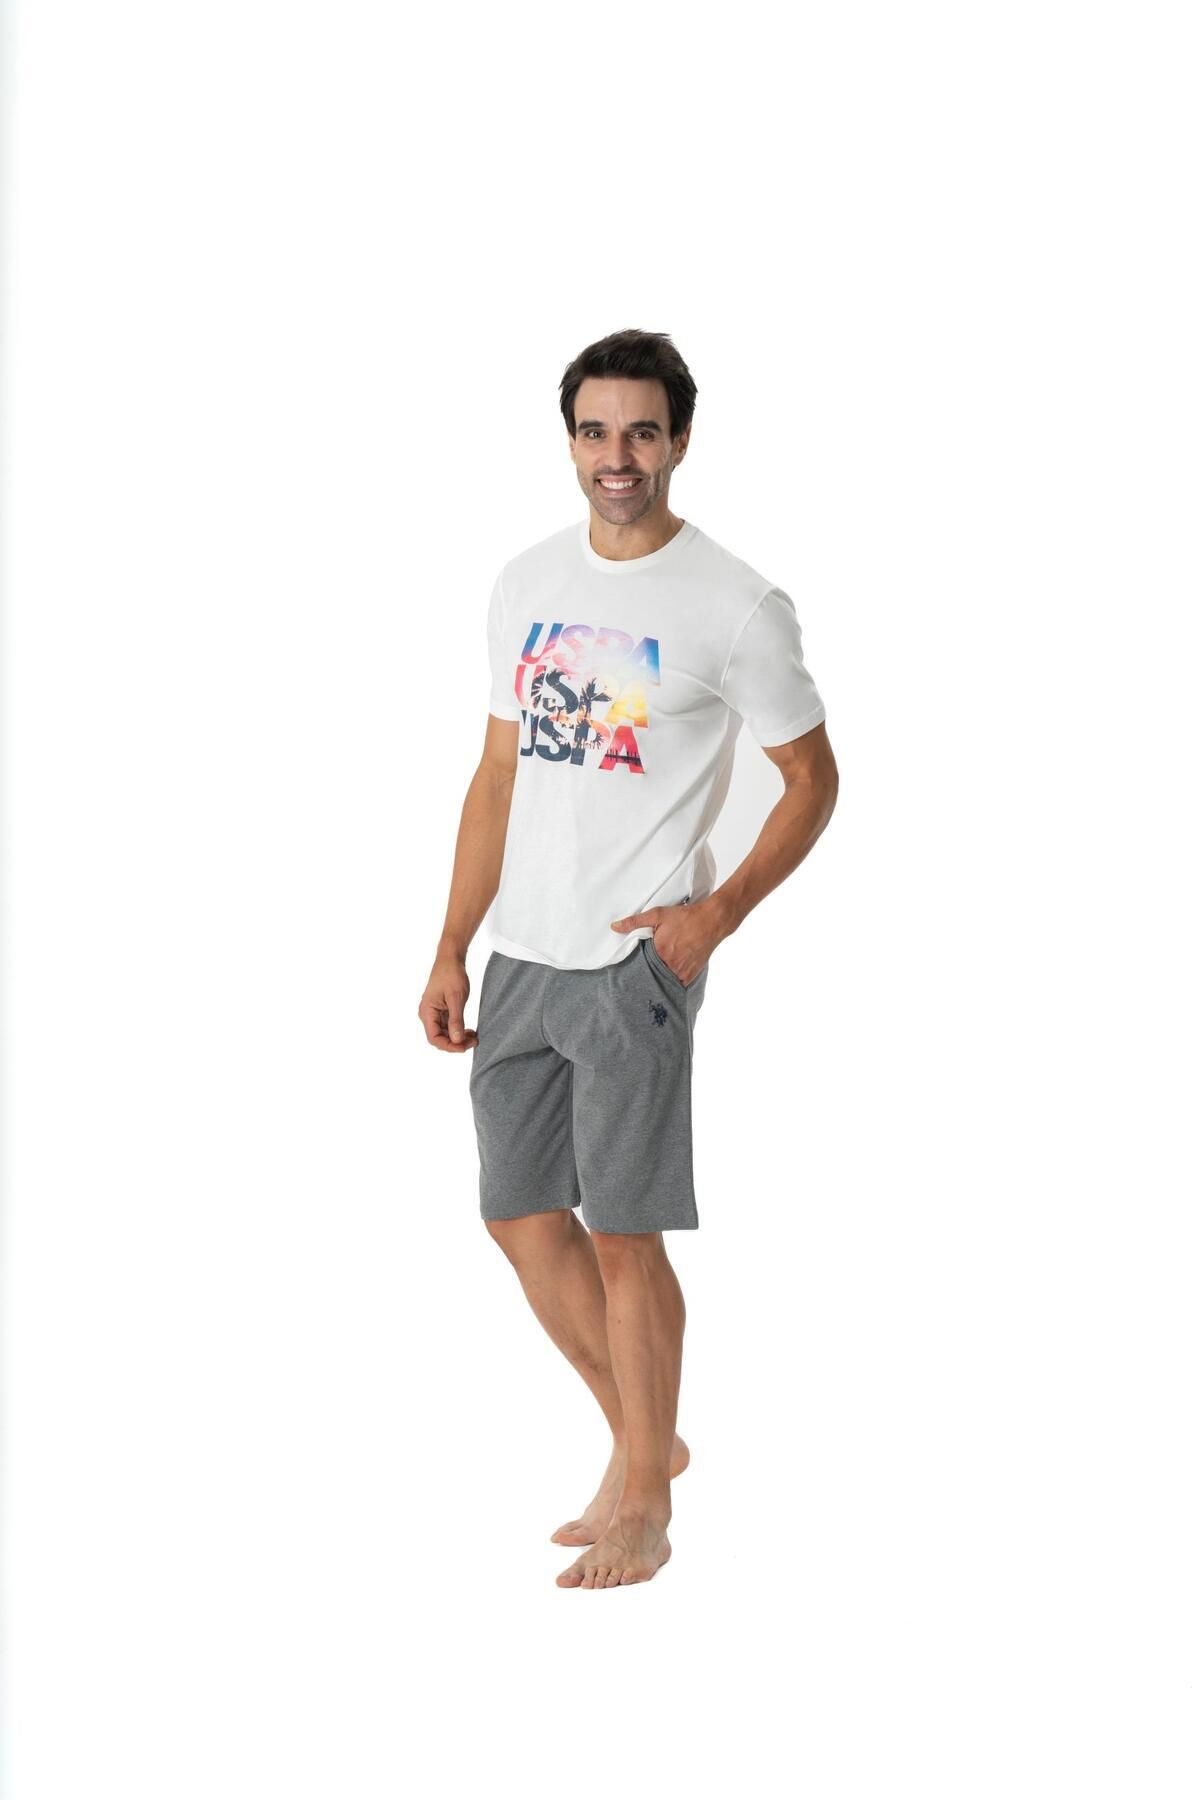 U.S. Polo Assn. U.S. Polo Assn. Erkek Yuvarlak Yaka Logololu Ekru T-shirt & Gri Şort Yazlık Pijama Takımı